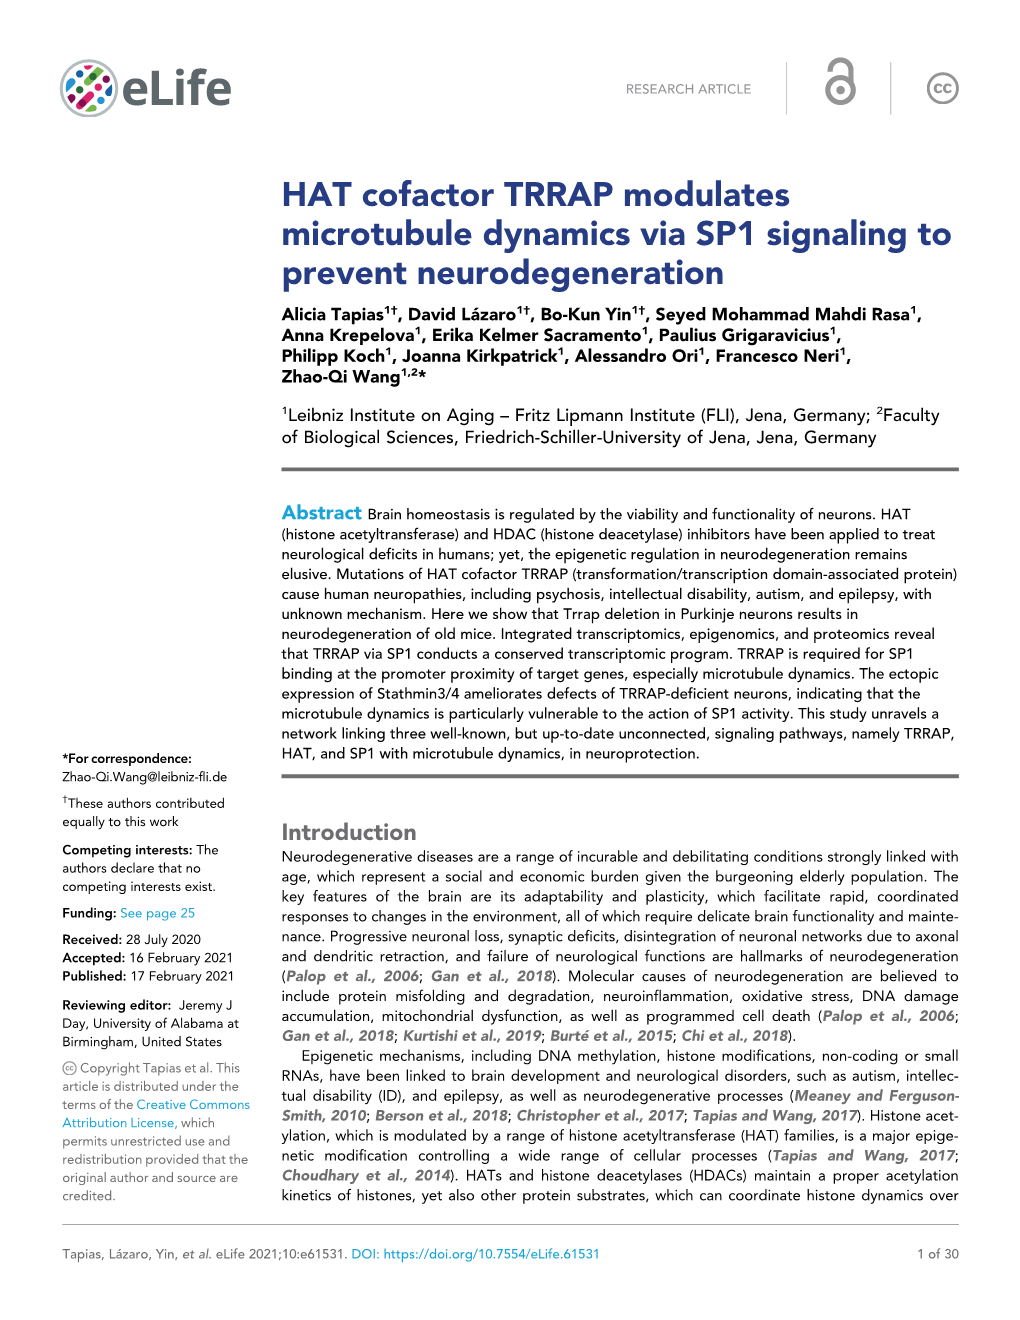 HAT Cofactor TRRAP Modulates Microtubule Dynamics Via SP1